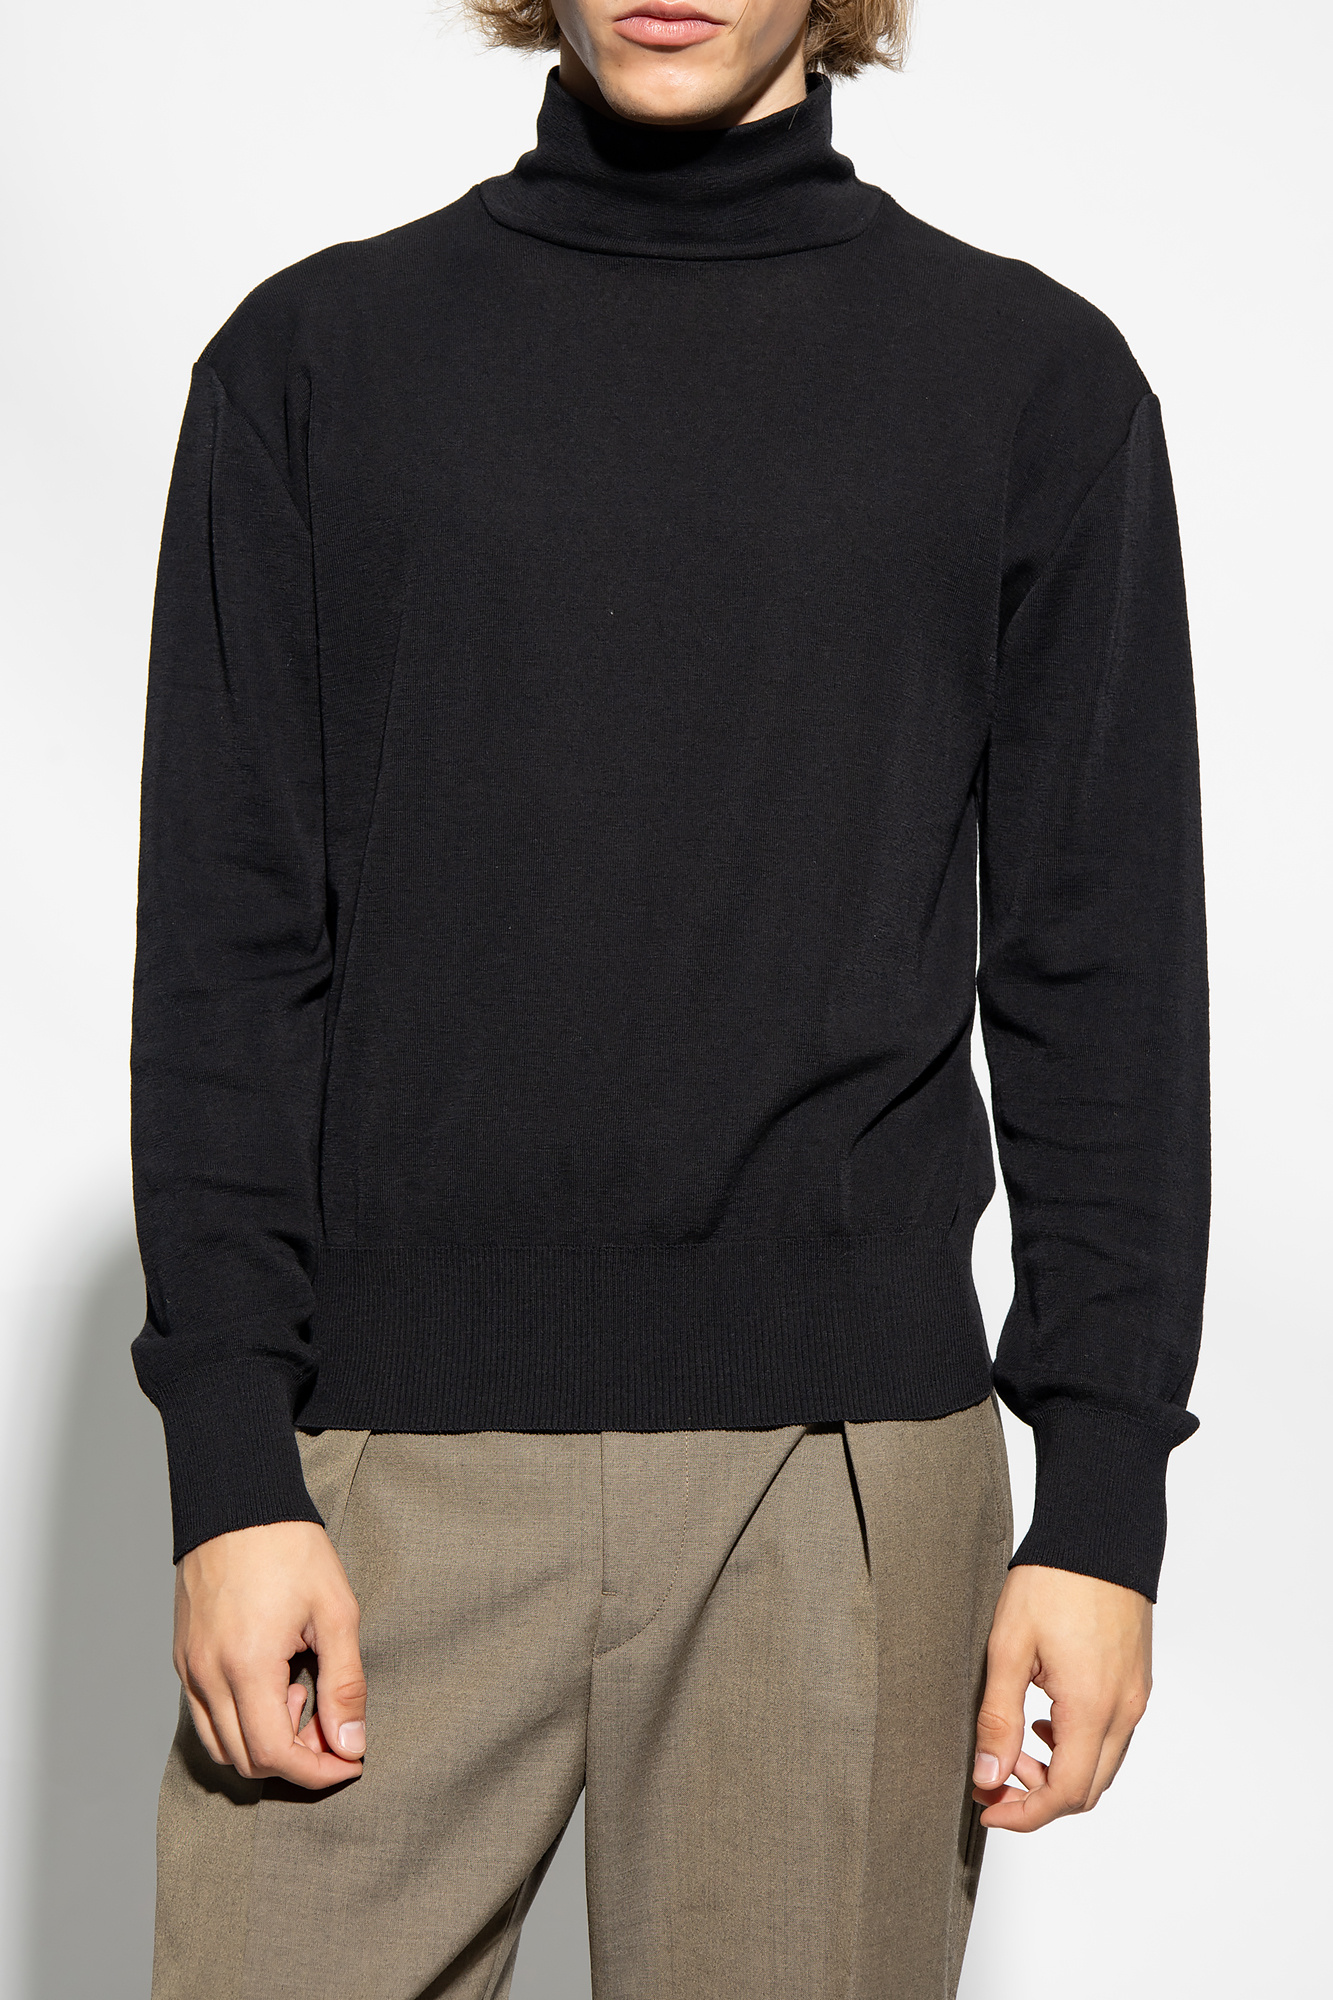 T by Alexander Wang Sheer Wool Turtleneck Sweater, Black